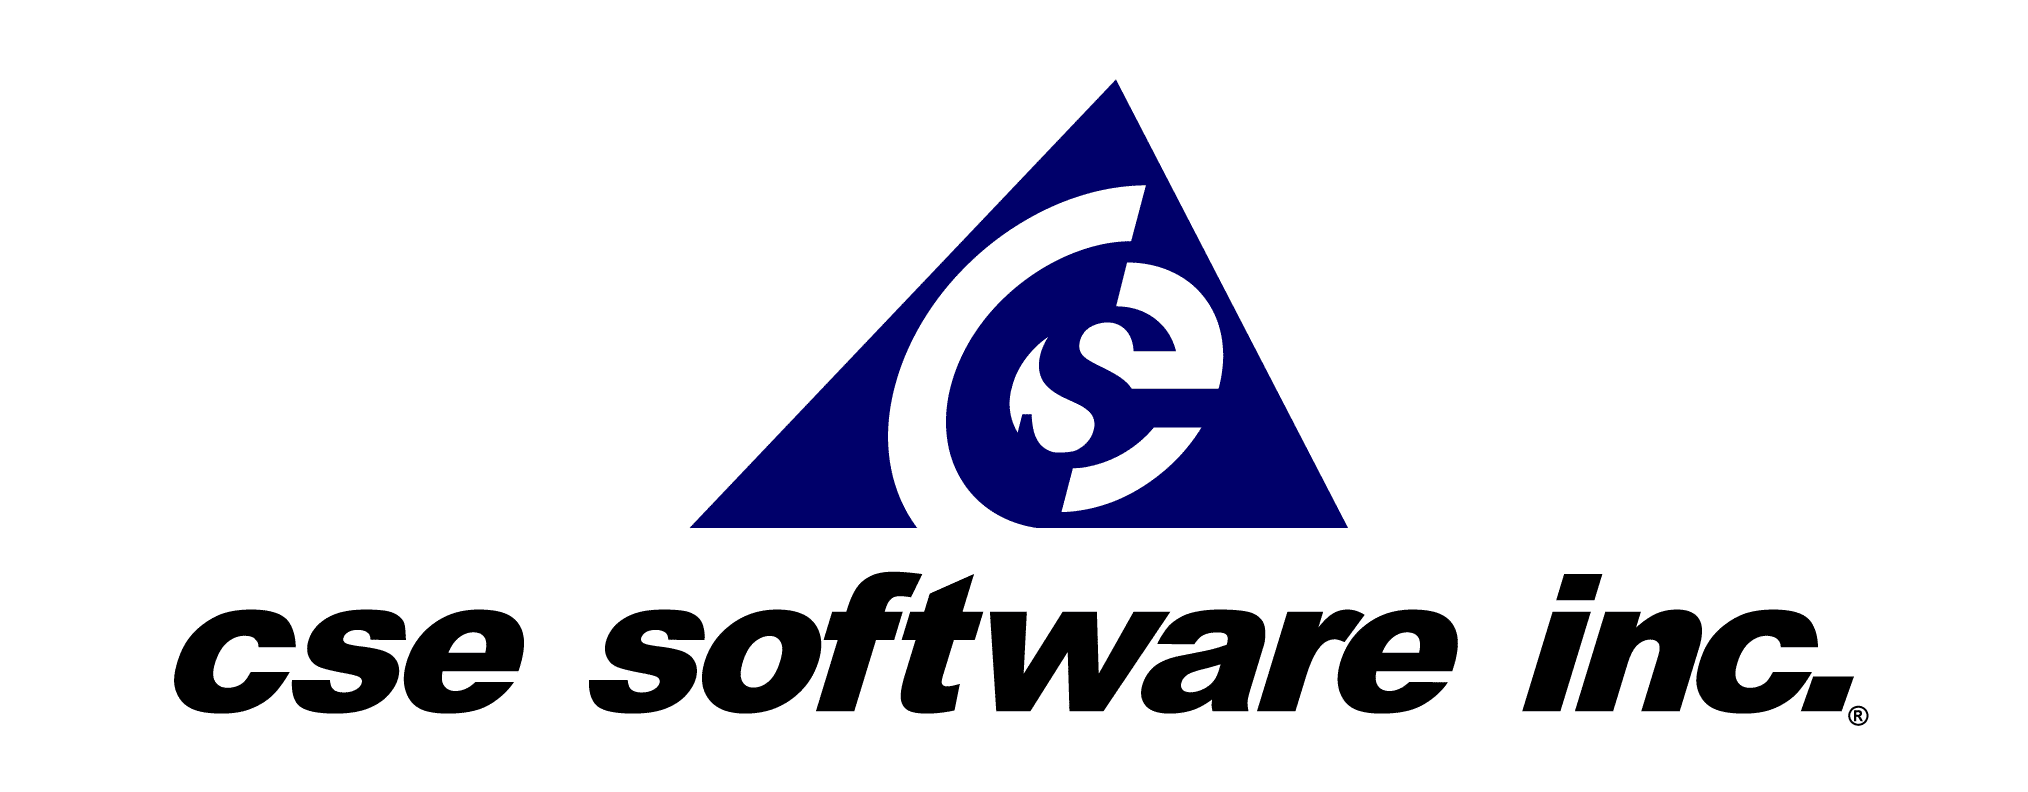 CSE Software Inc.